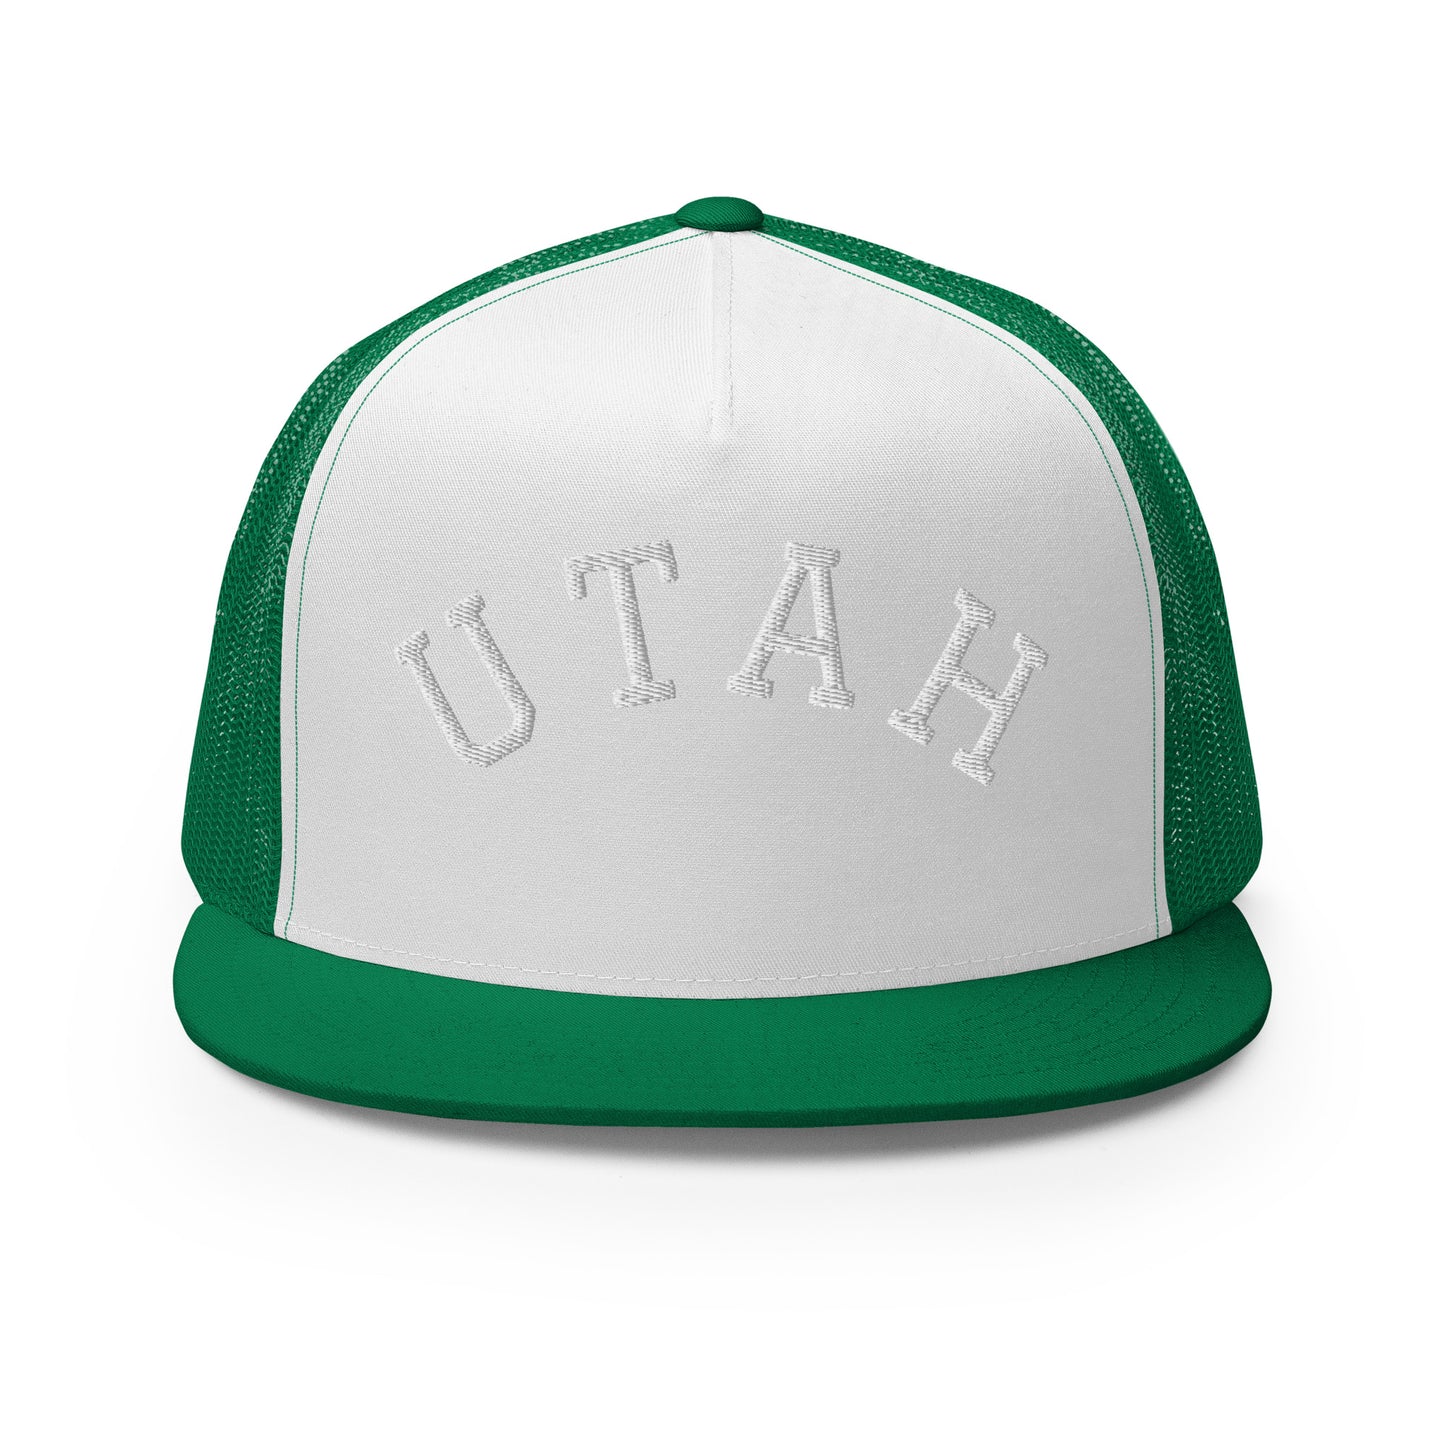 Utah Arch High 5 Panel A-Frame Snapback Trucker Hat